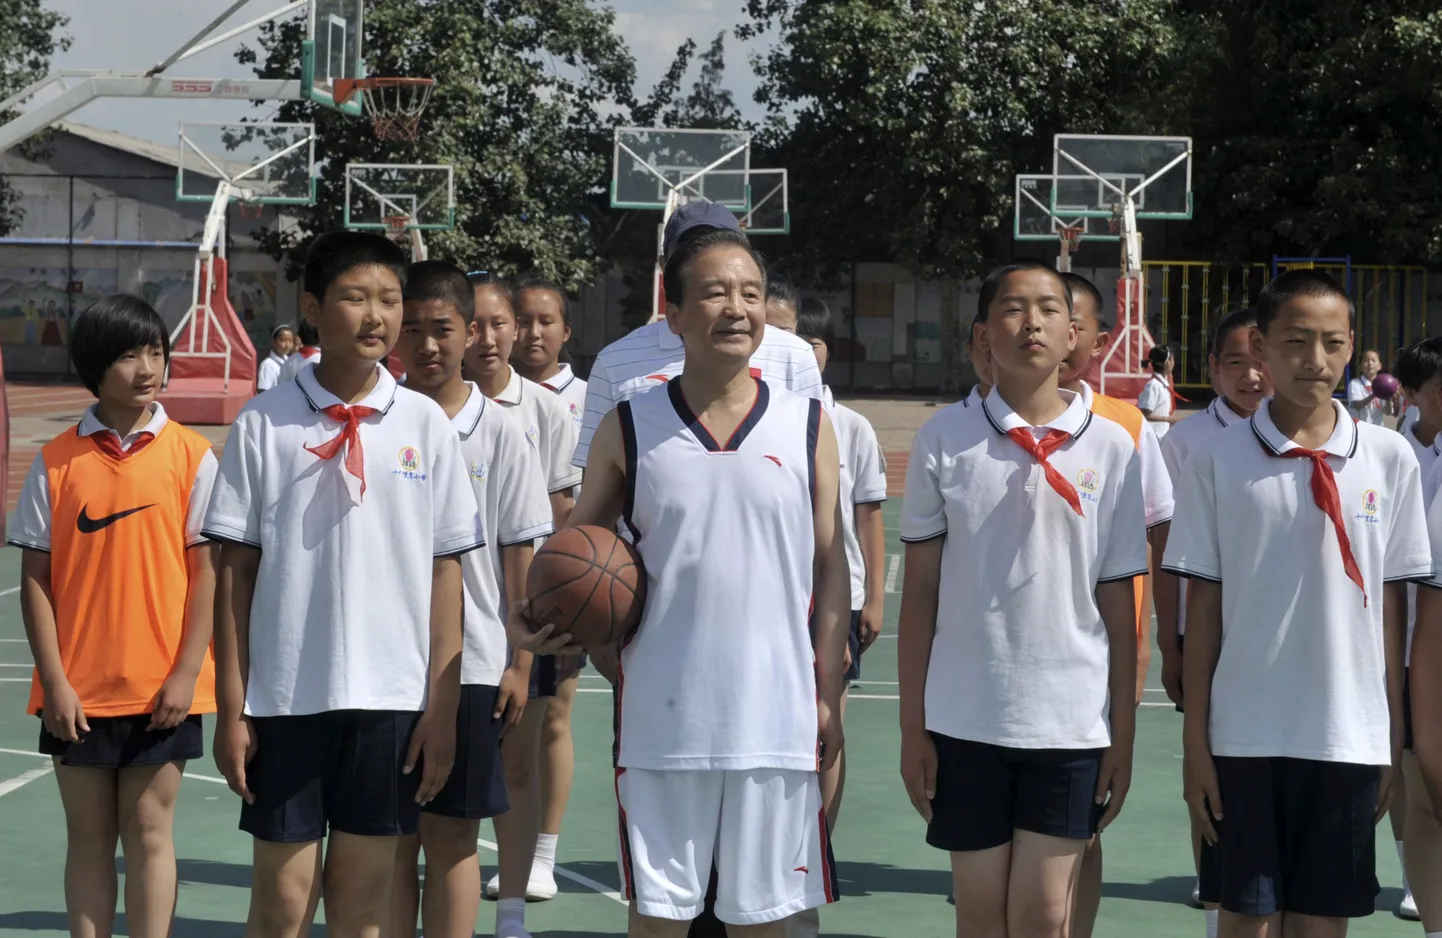 Hiina peaminister Wen Jiabao korvapalliga laste seas.